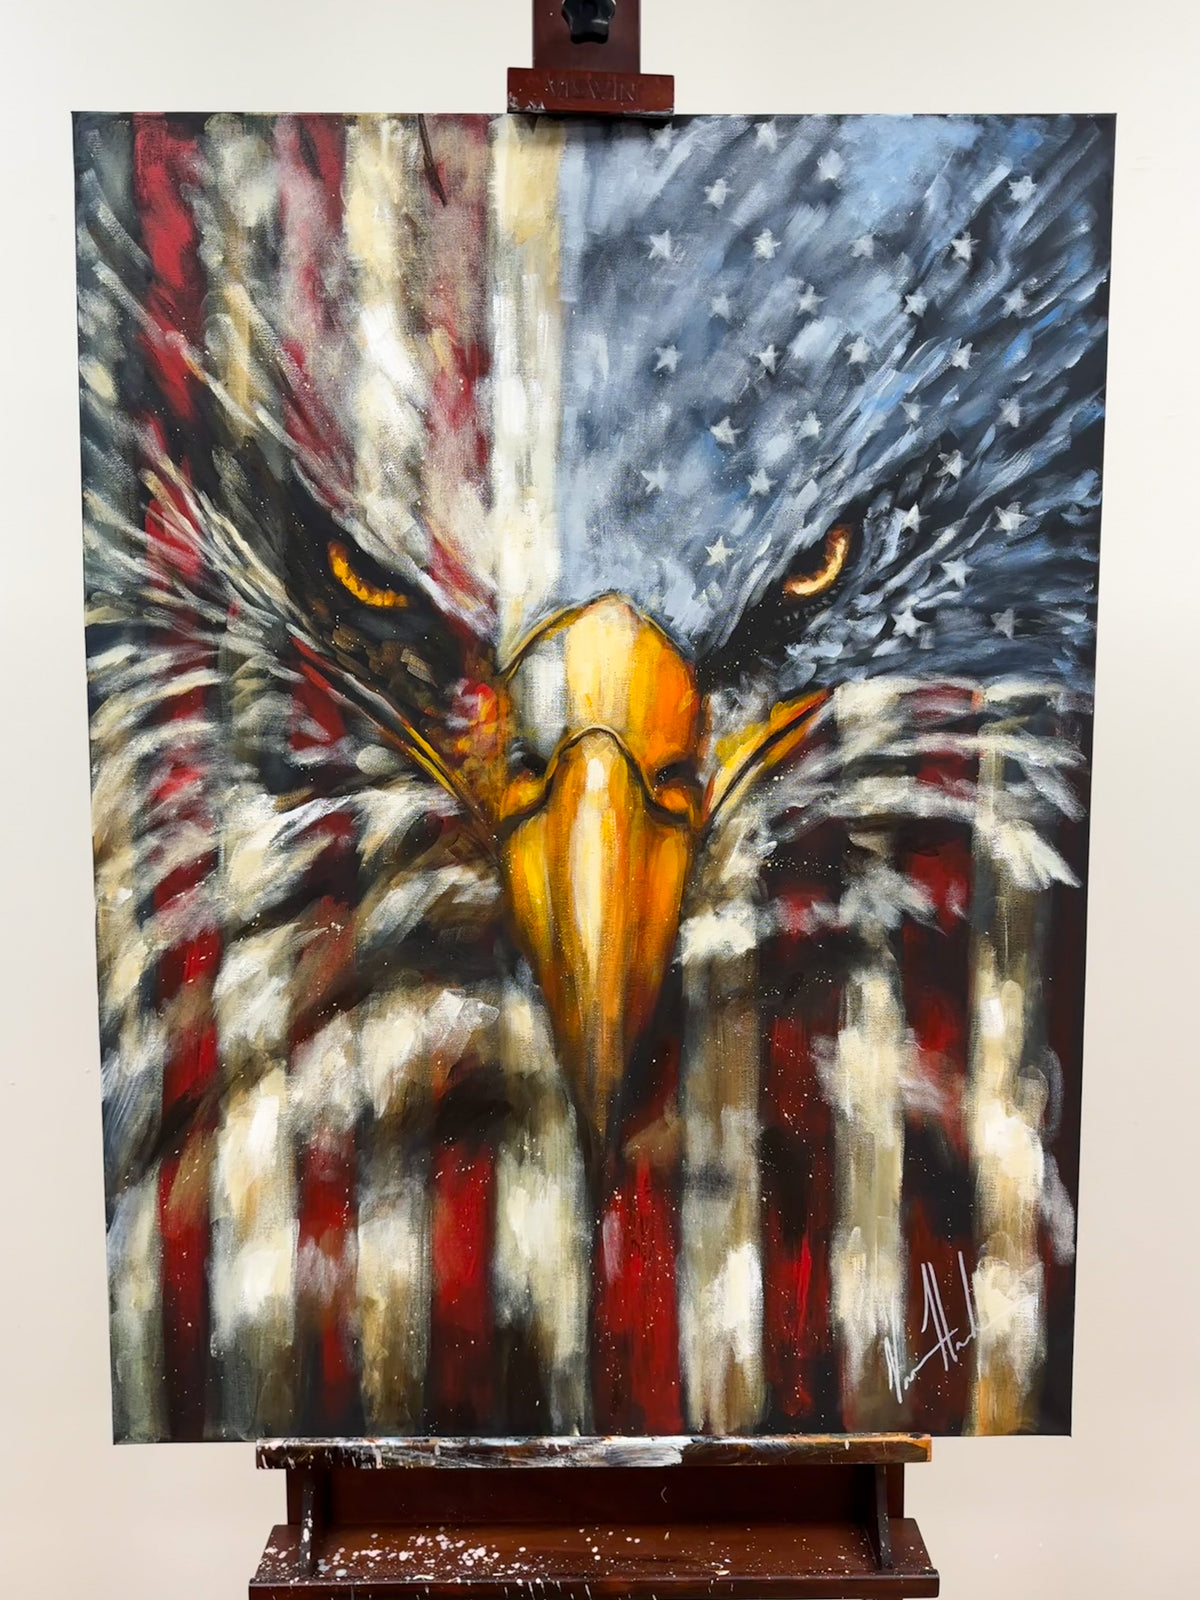 Stripes of Freedom - 30”x40” Acrylic Painting